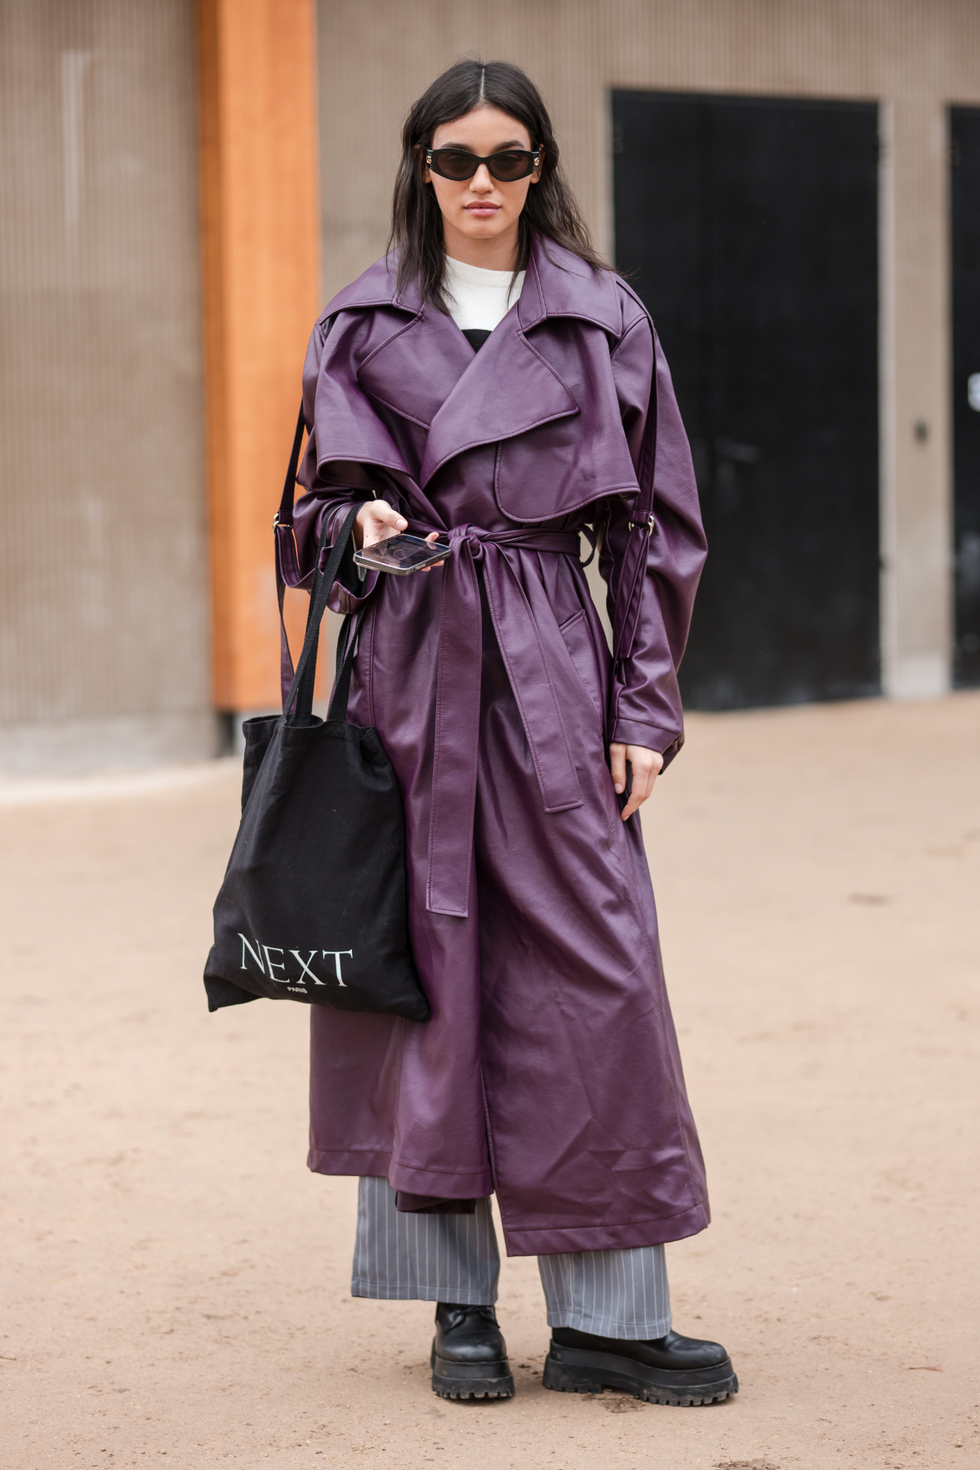 a woman wearing a purple coat and sunglasses